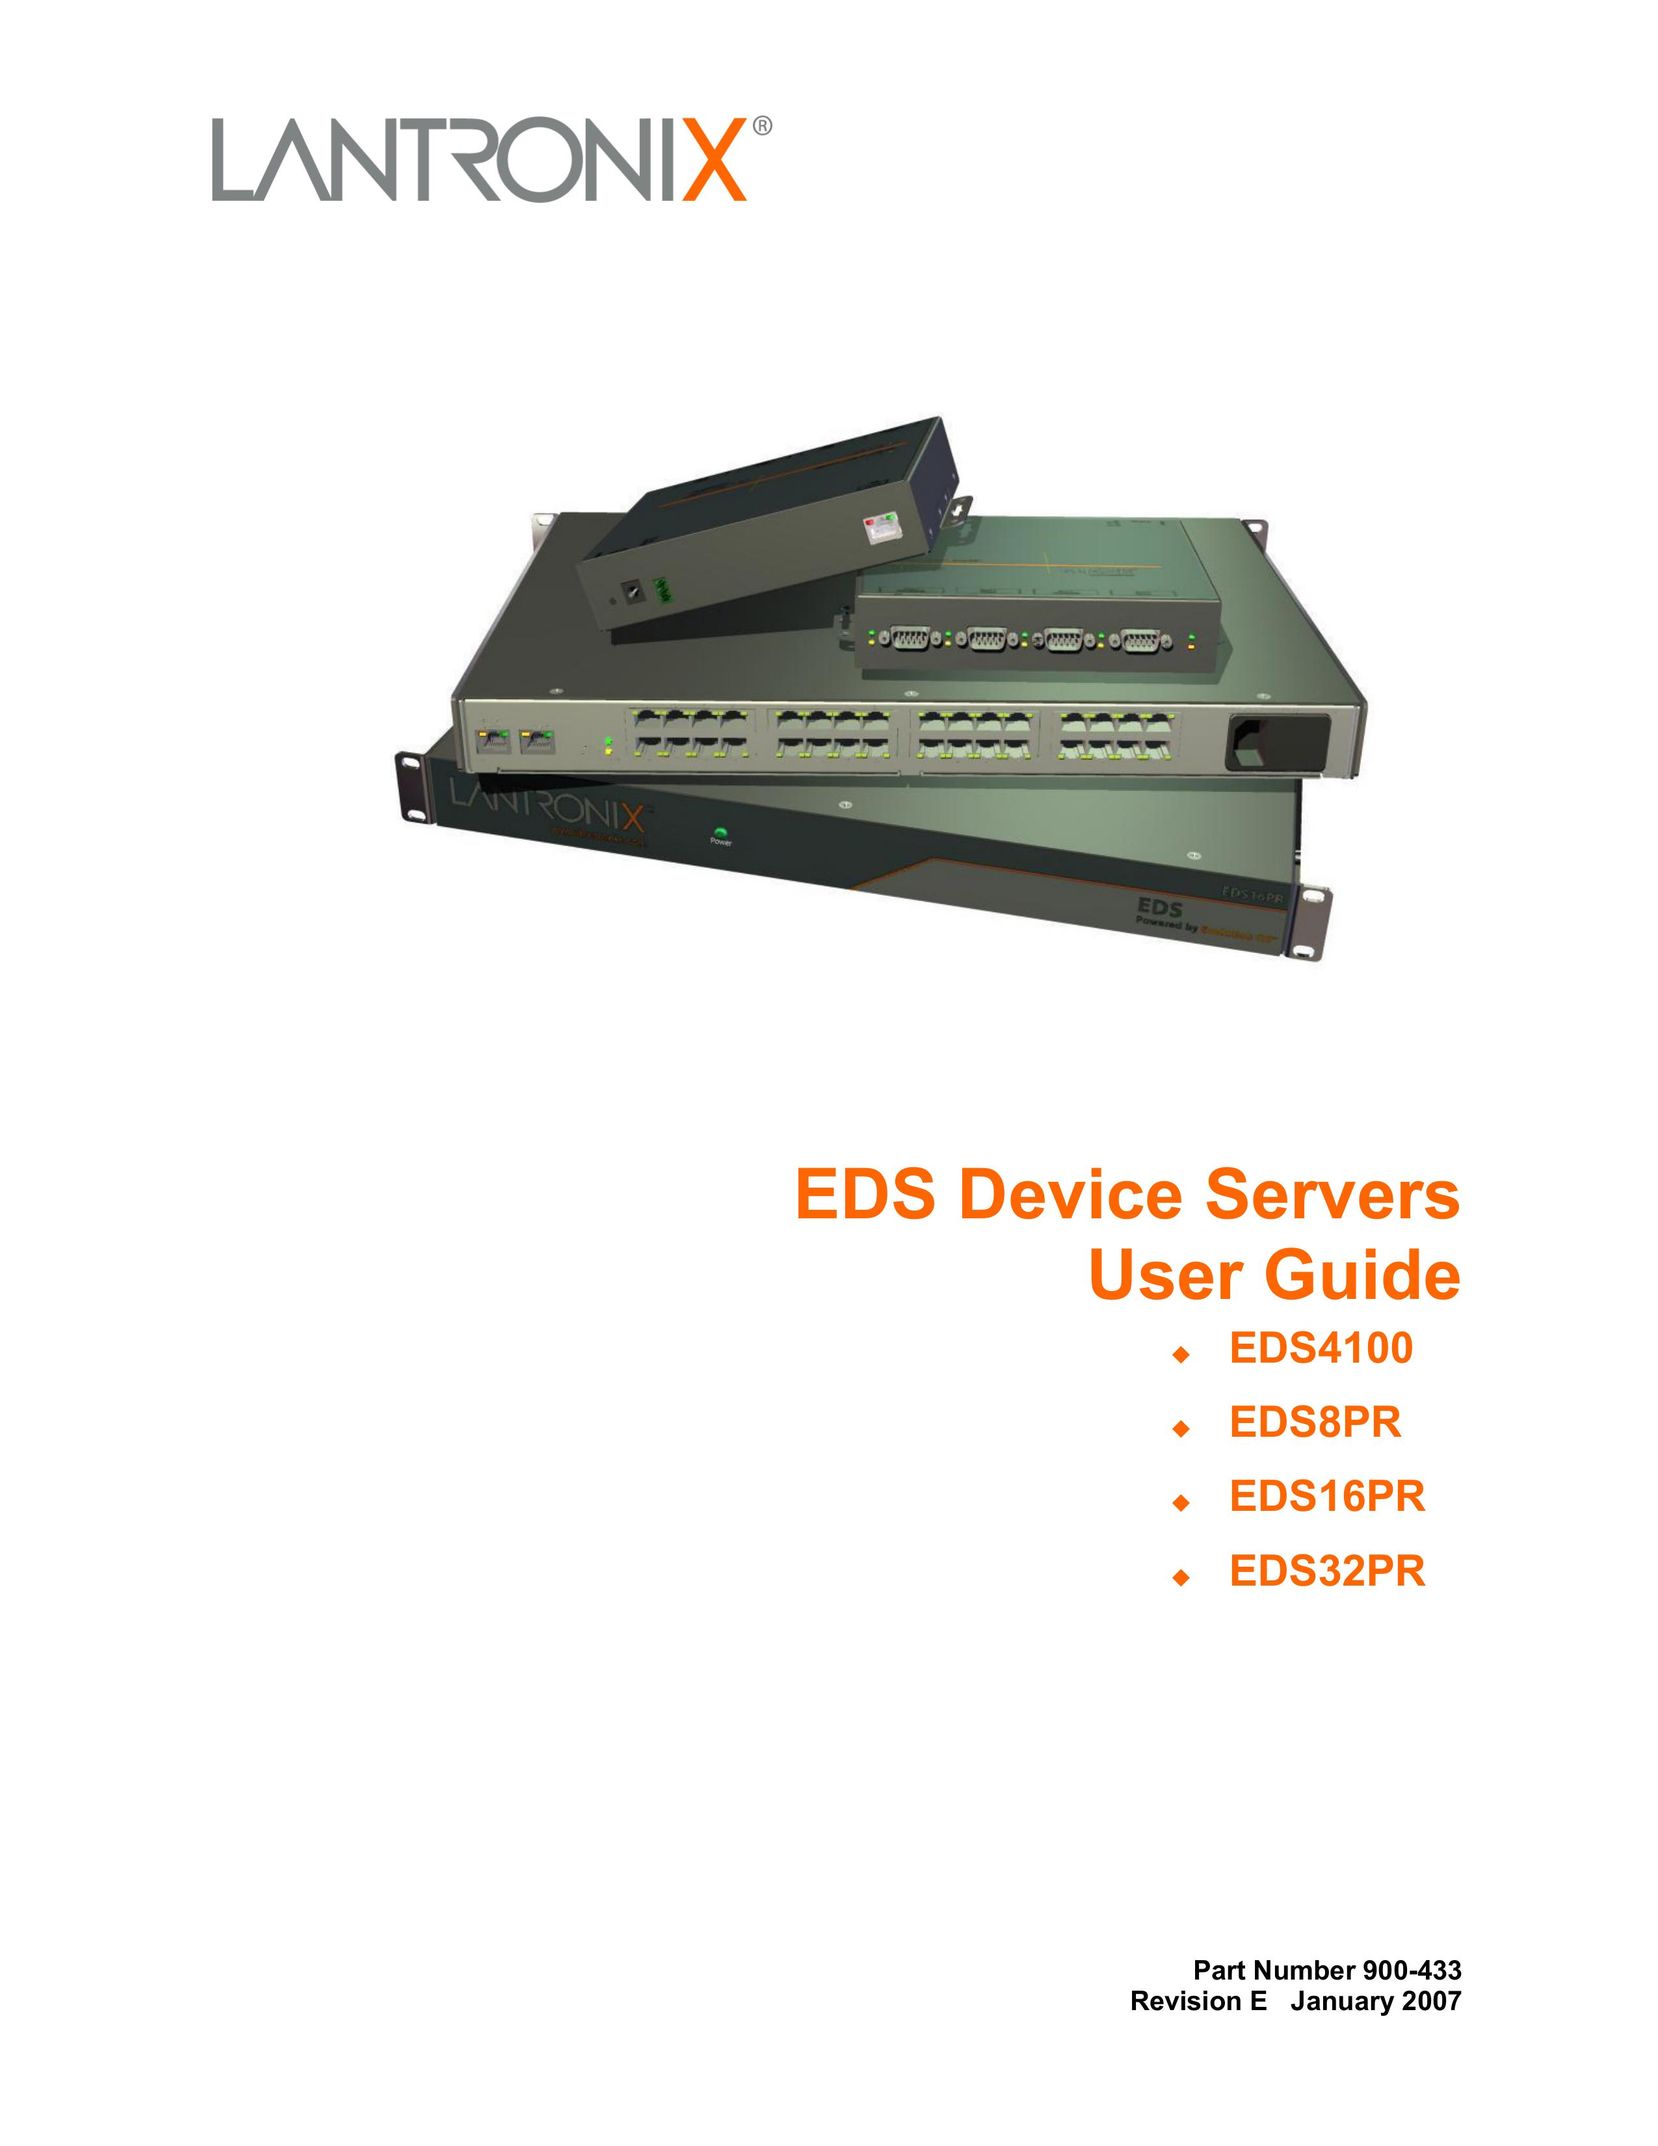 Lantronix EDS8PR Network Card User Manual